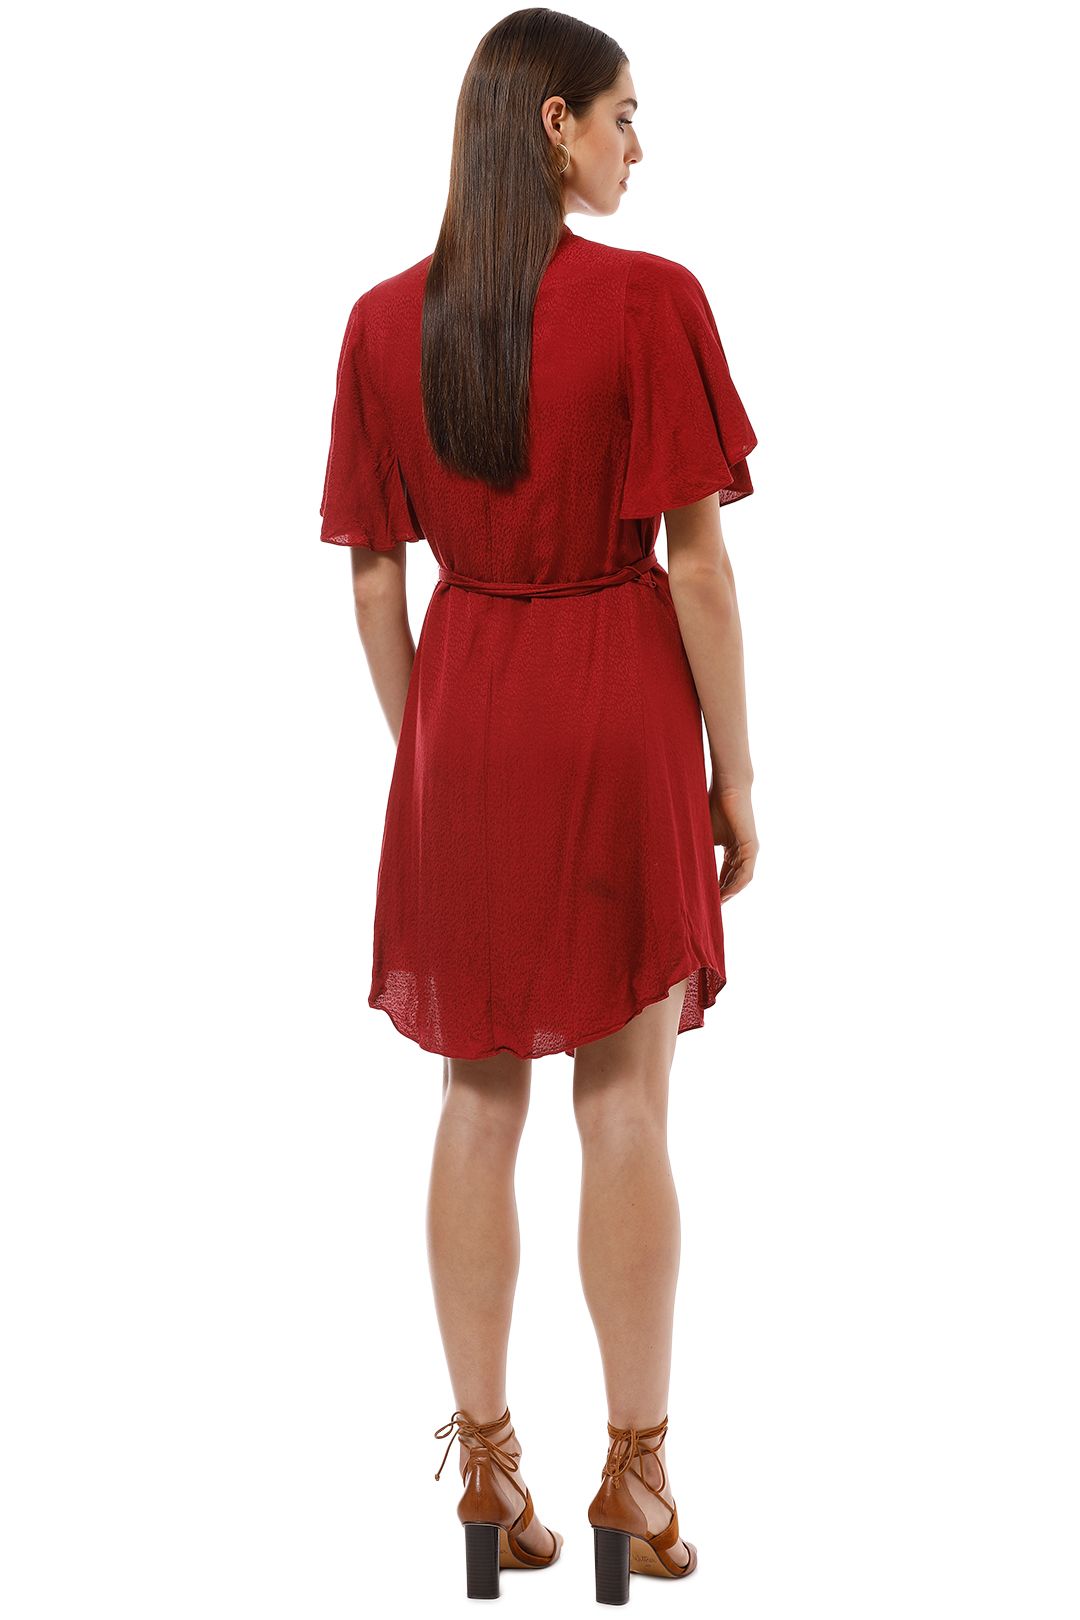 Saba - Meadow Dress - Red - Back